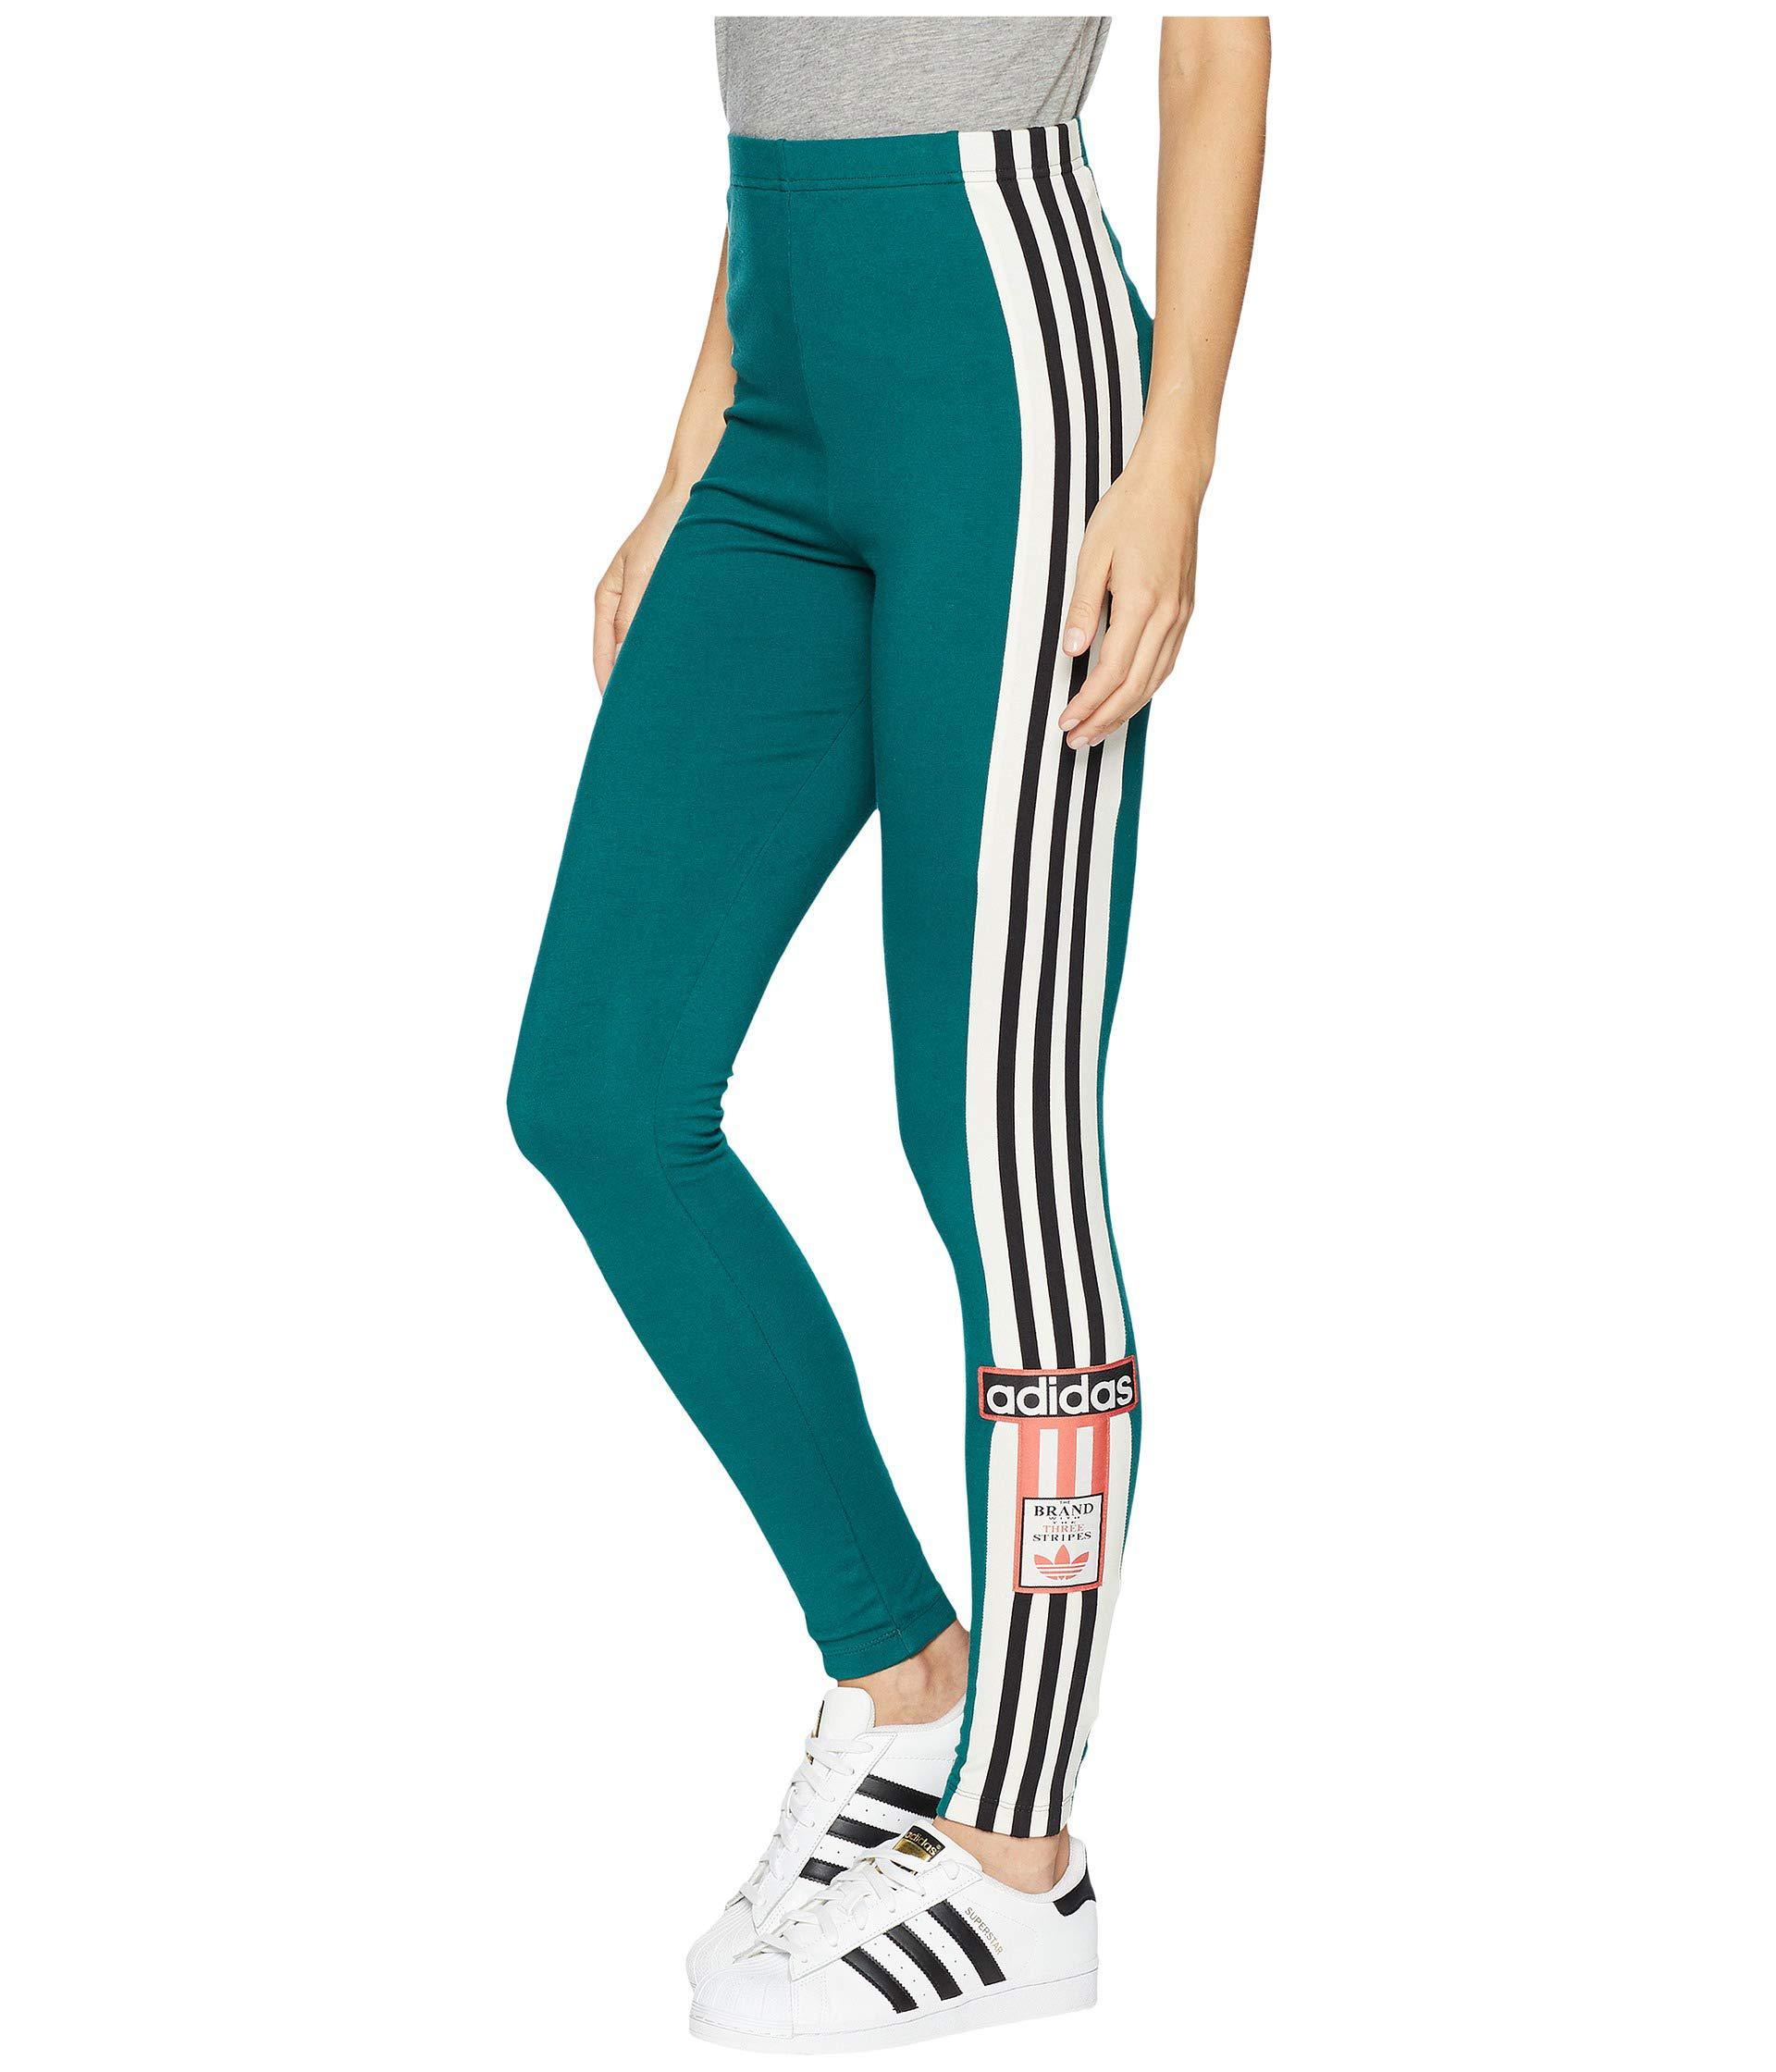 Buy > green adidas leggings > in stock